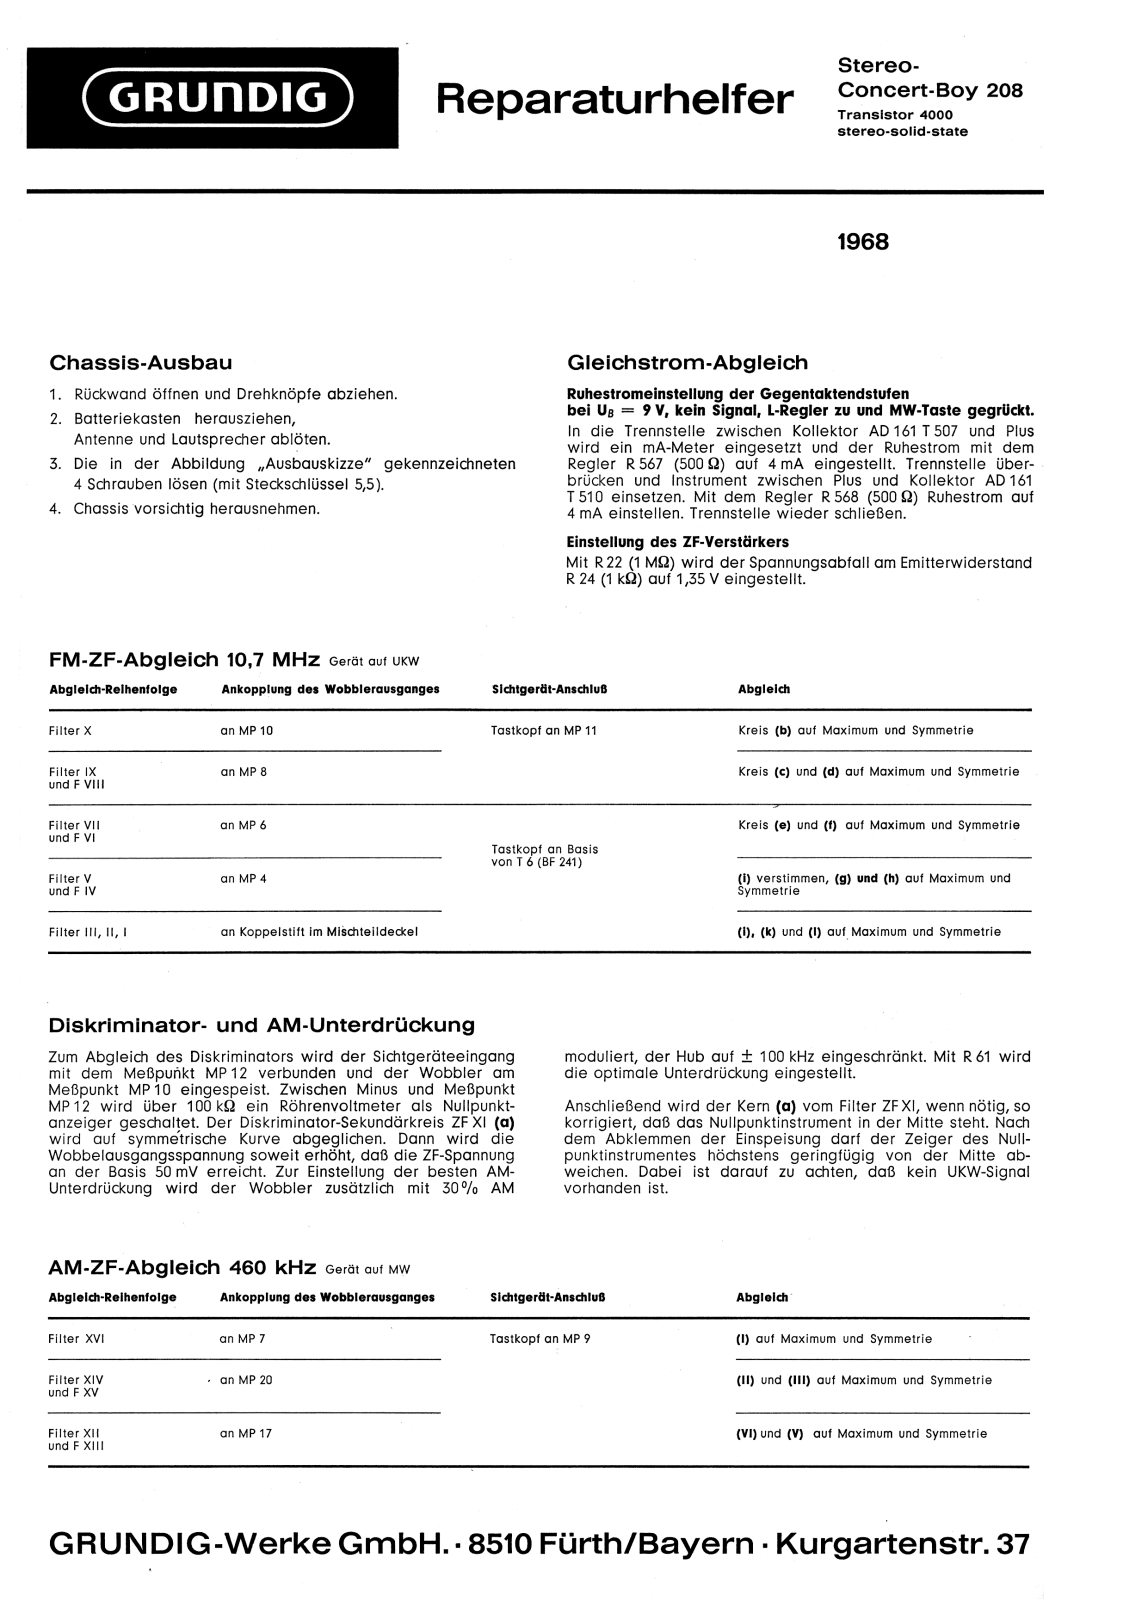 Grundig Concert-Boy-208 Service Manual